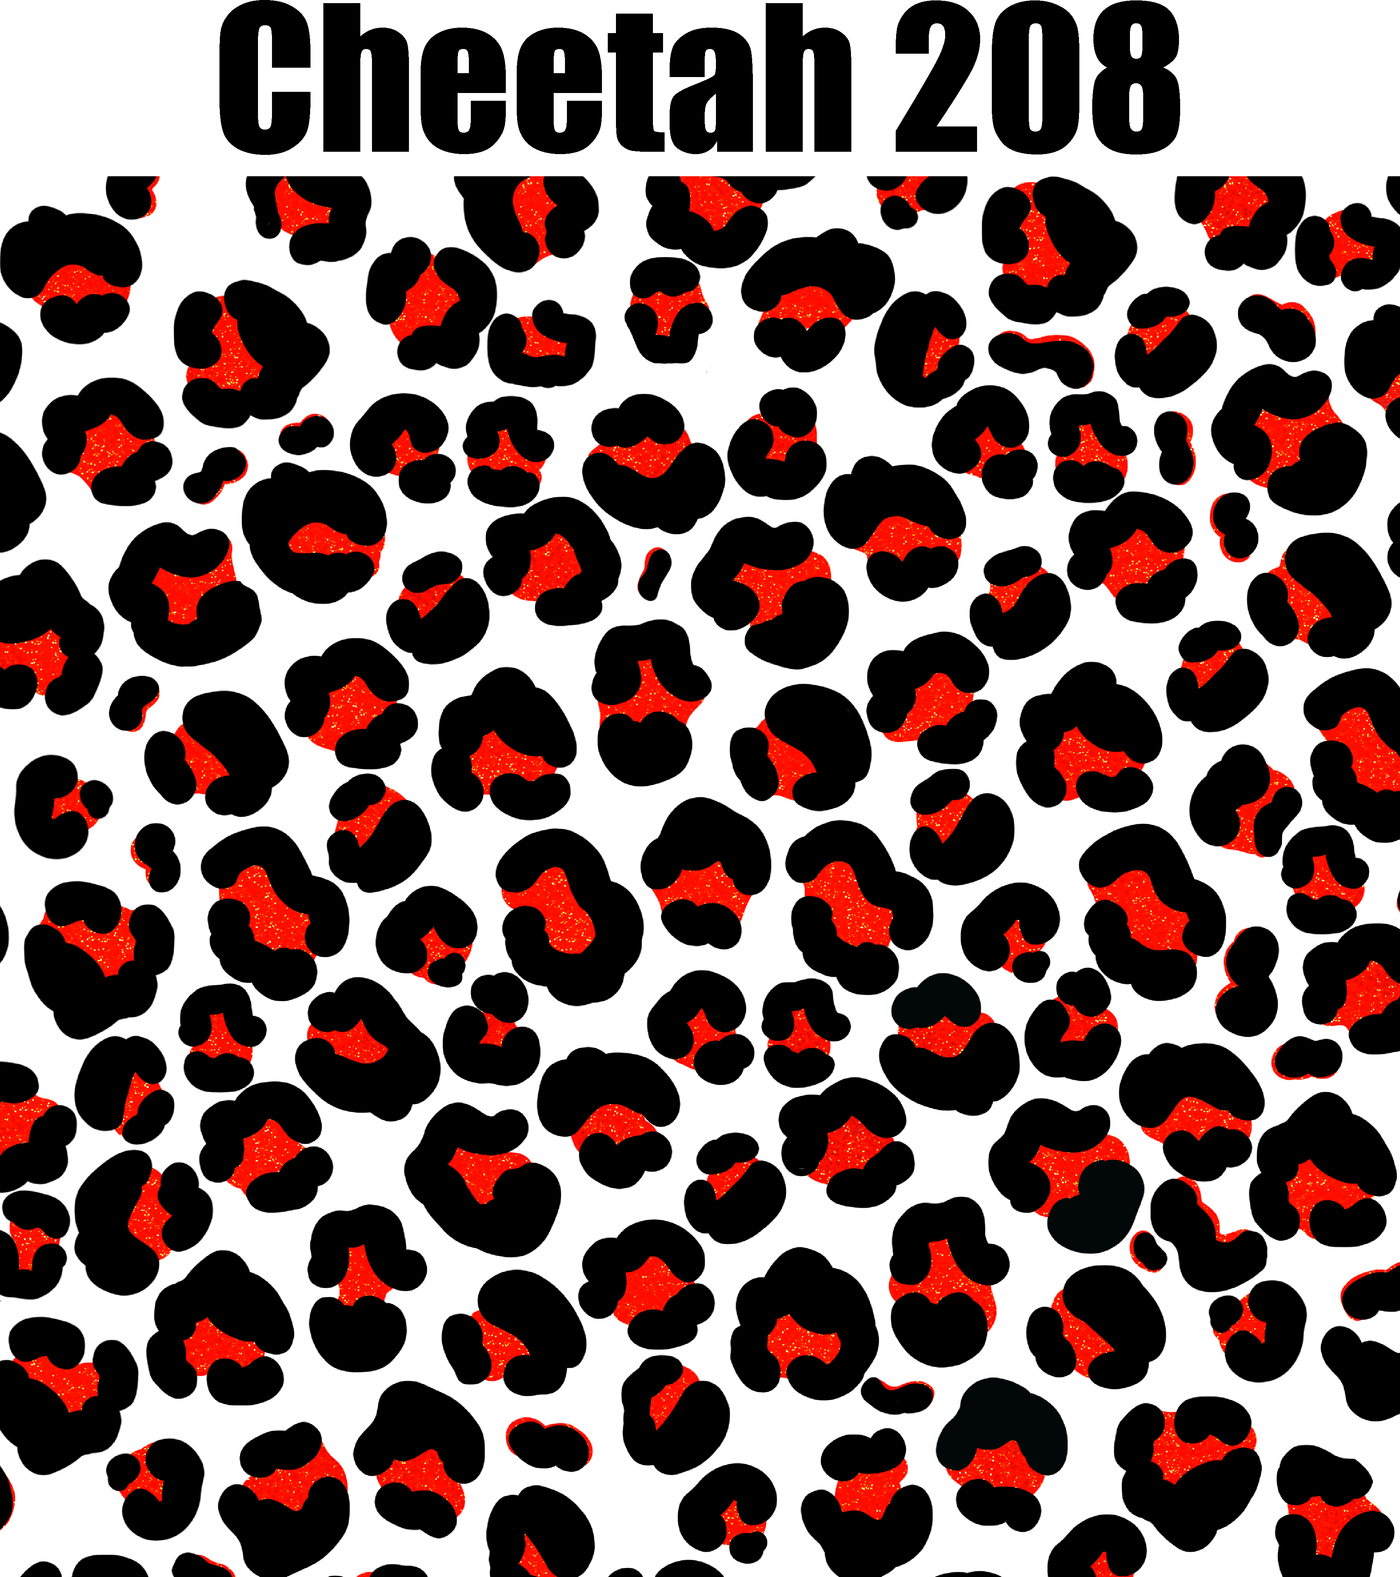 Adhesive Patterned Vinyl - Cheetah 208